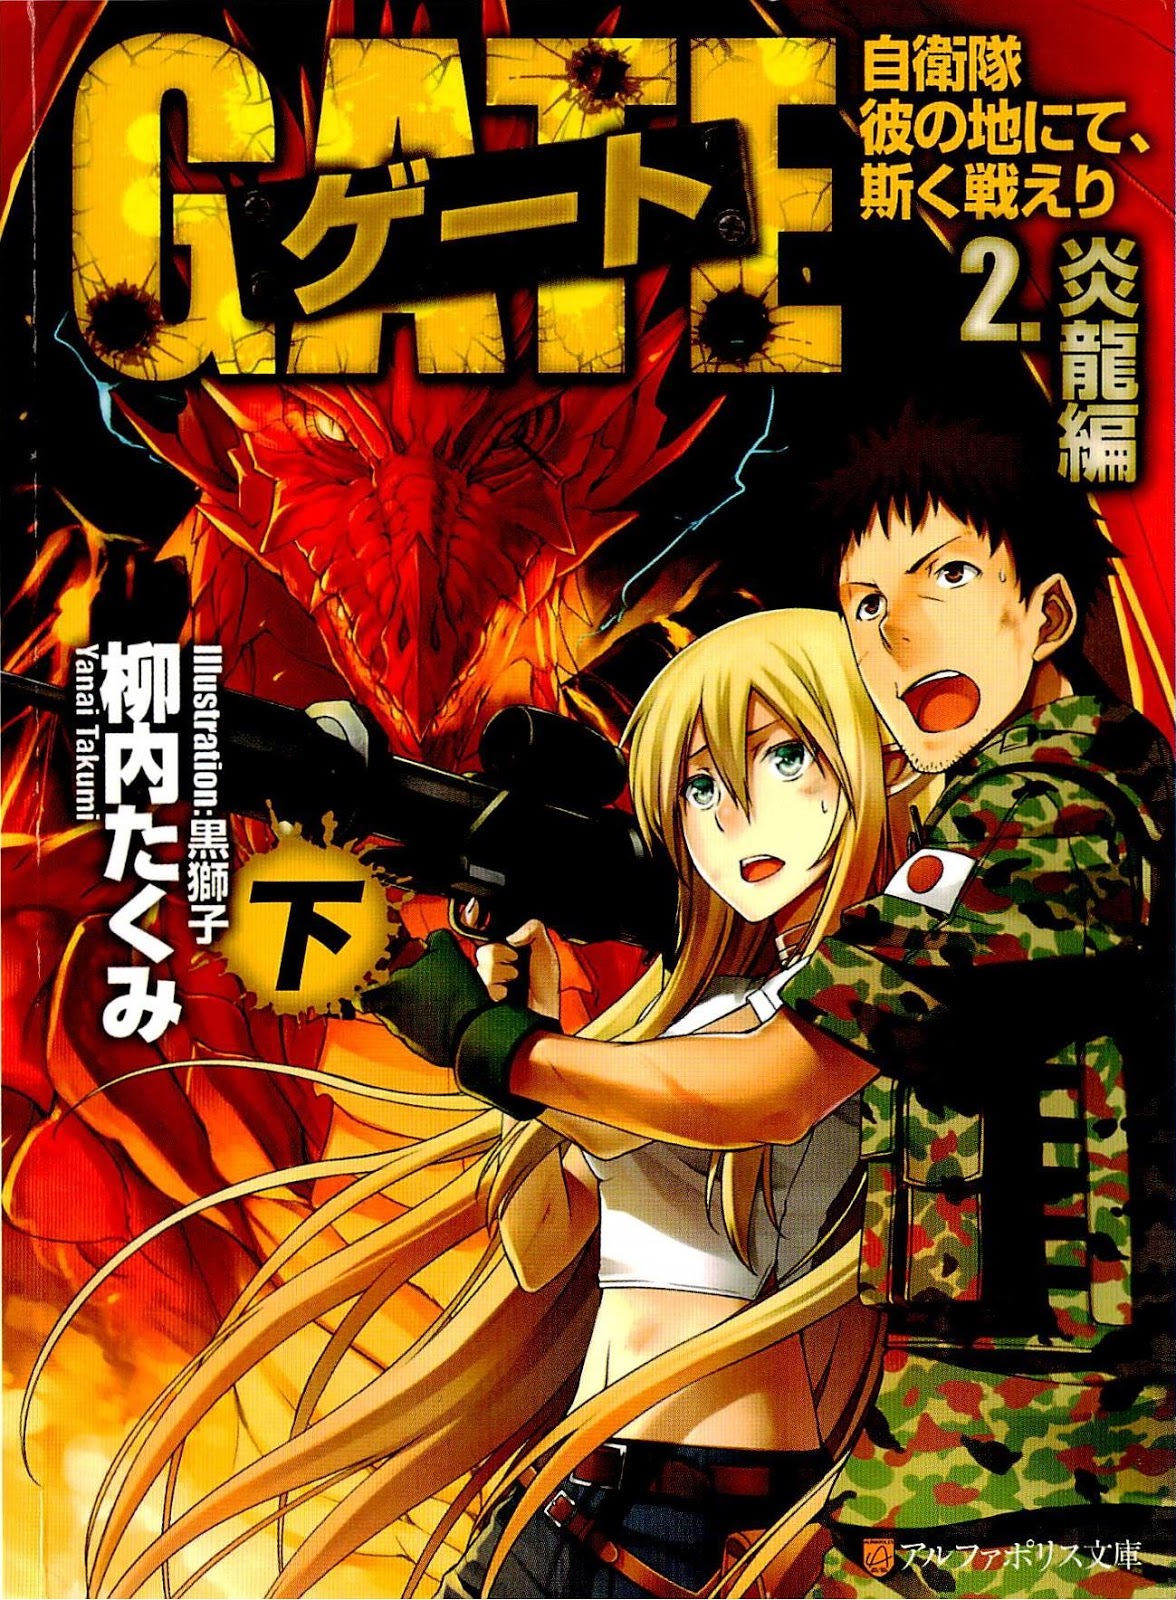 GATE: Jieitai Kano Umi nite Kaku Tatakaeri SEASON2-4 [Last Volume] (Alpha  Light Bunko) [Light Novel]